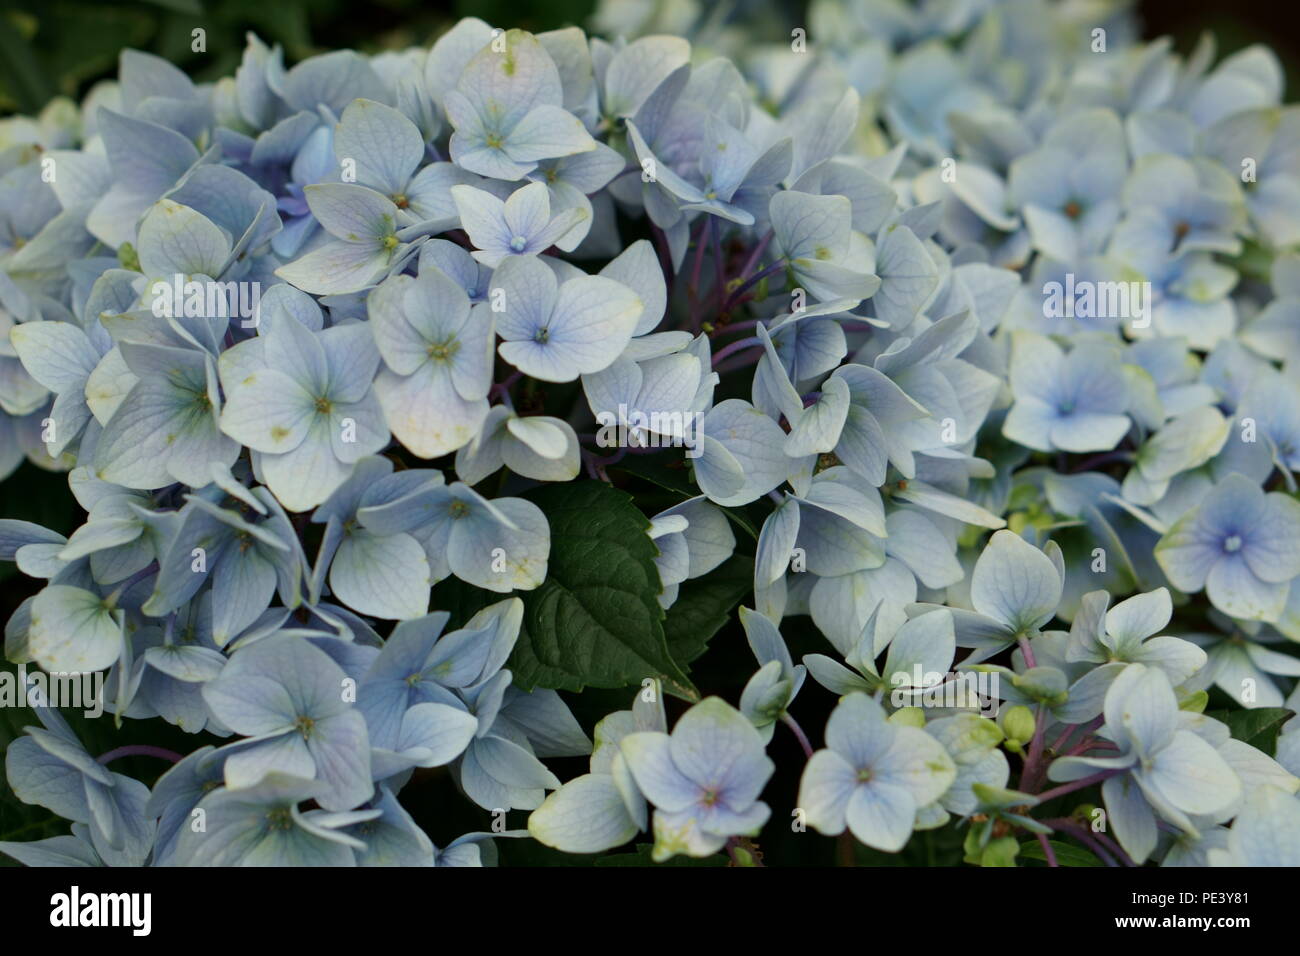 Group of sky light blue flowers Stock Photo